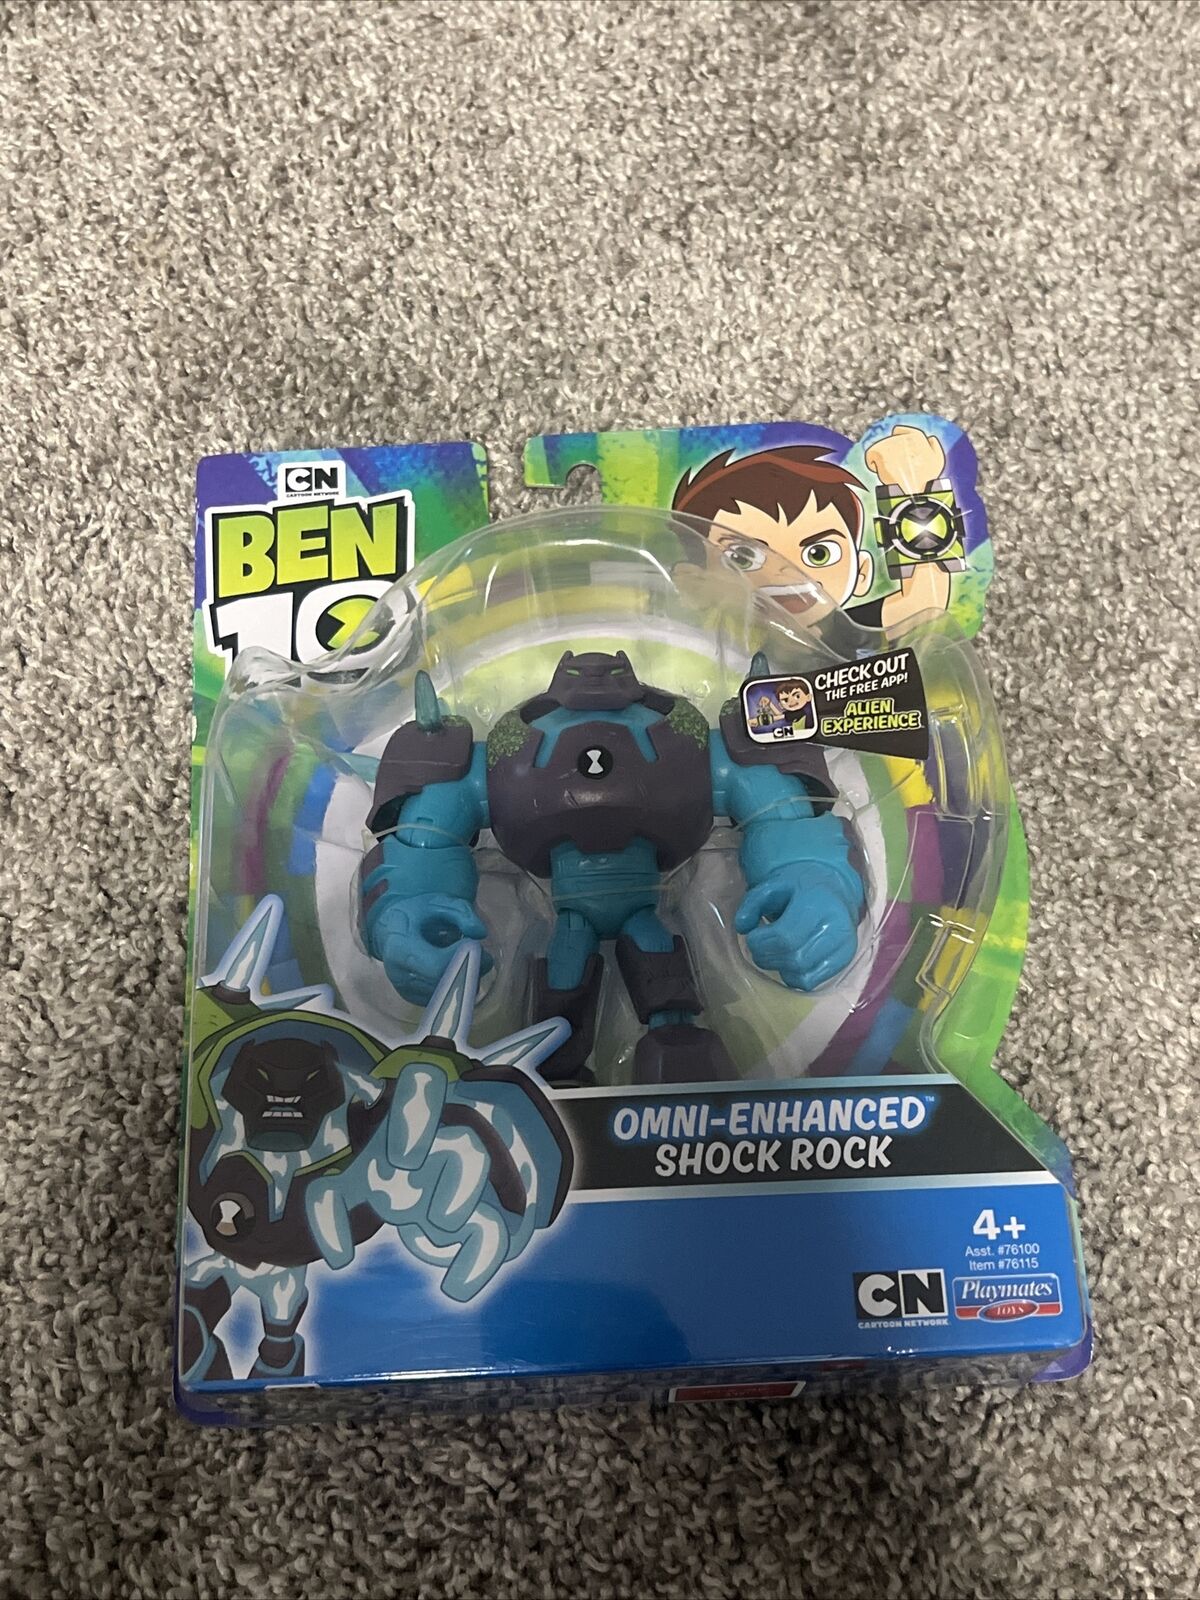 Ben 10 Omni-Enhanced Shock Rock Action Figure NEW Sealed 2018/19 Cartoon Network Playmates Toys